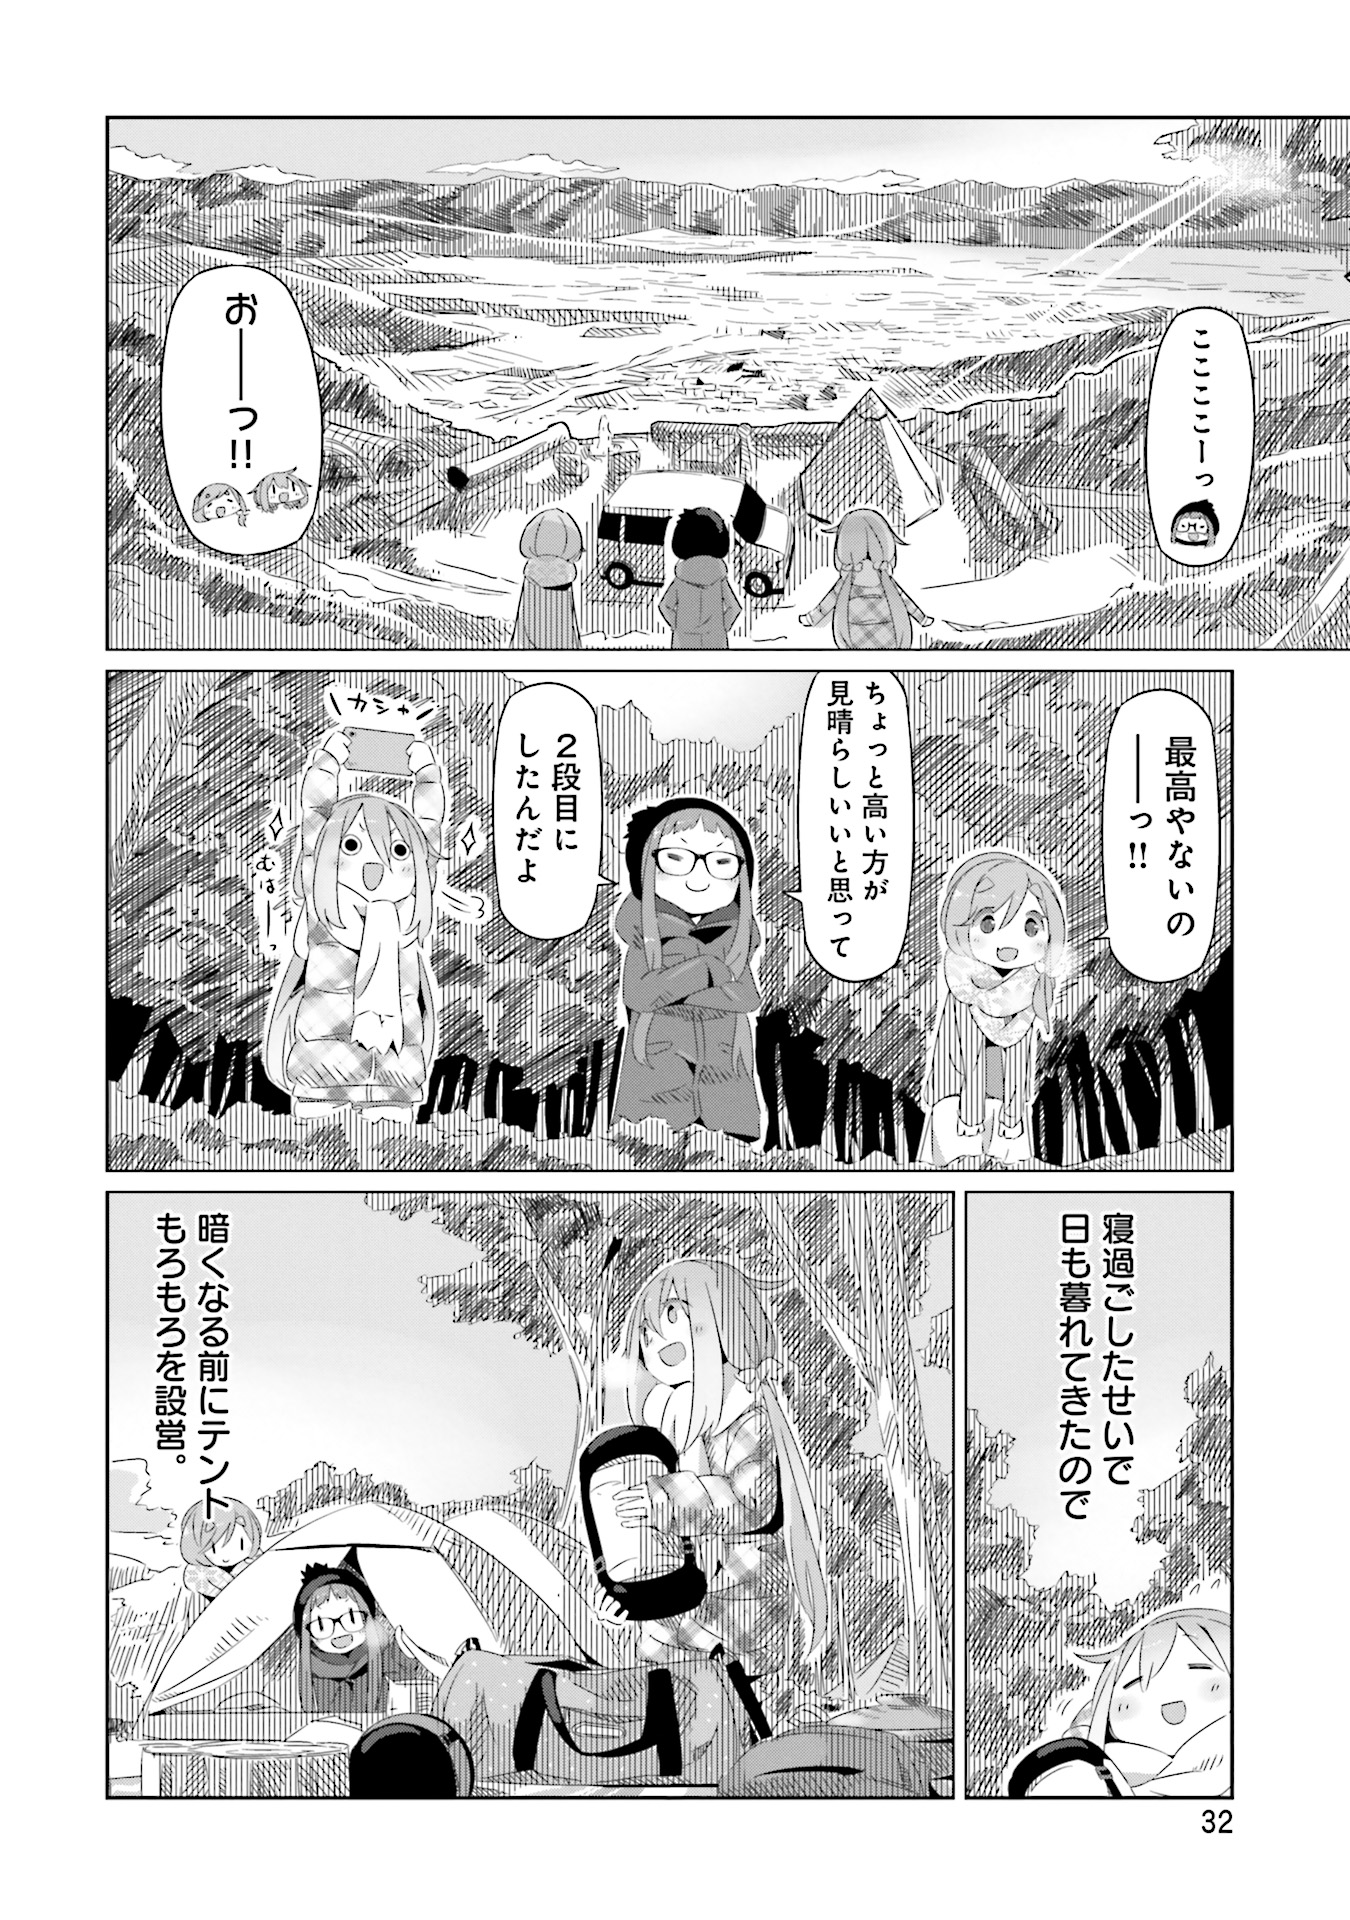 Yuru Camp - Chapter 8 - Page 4